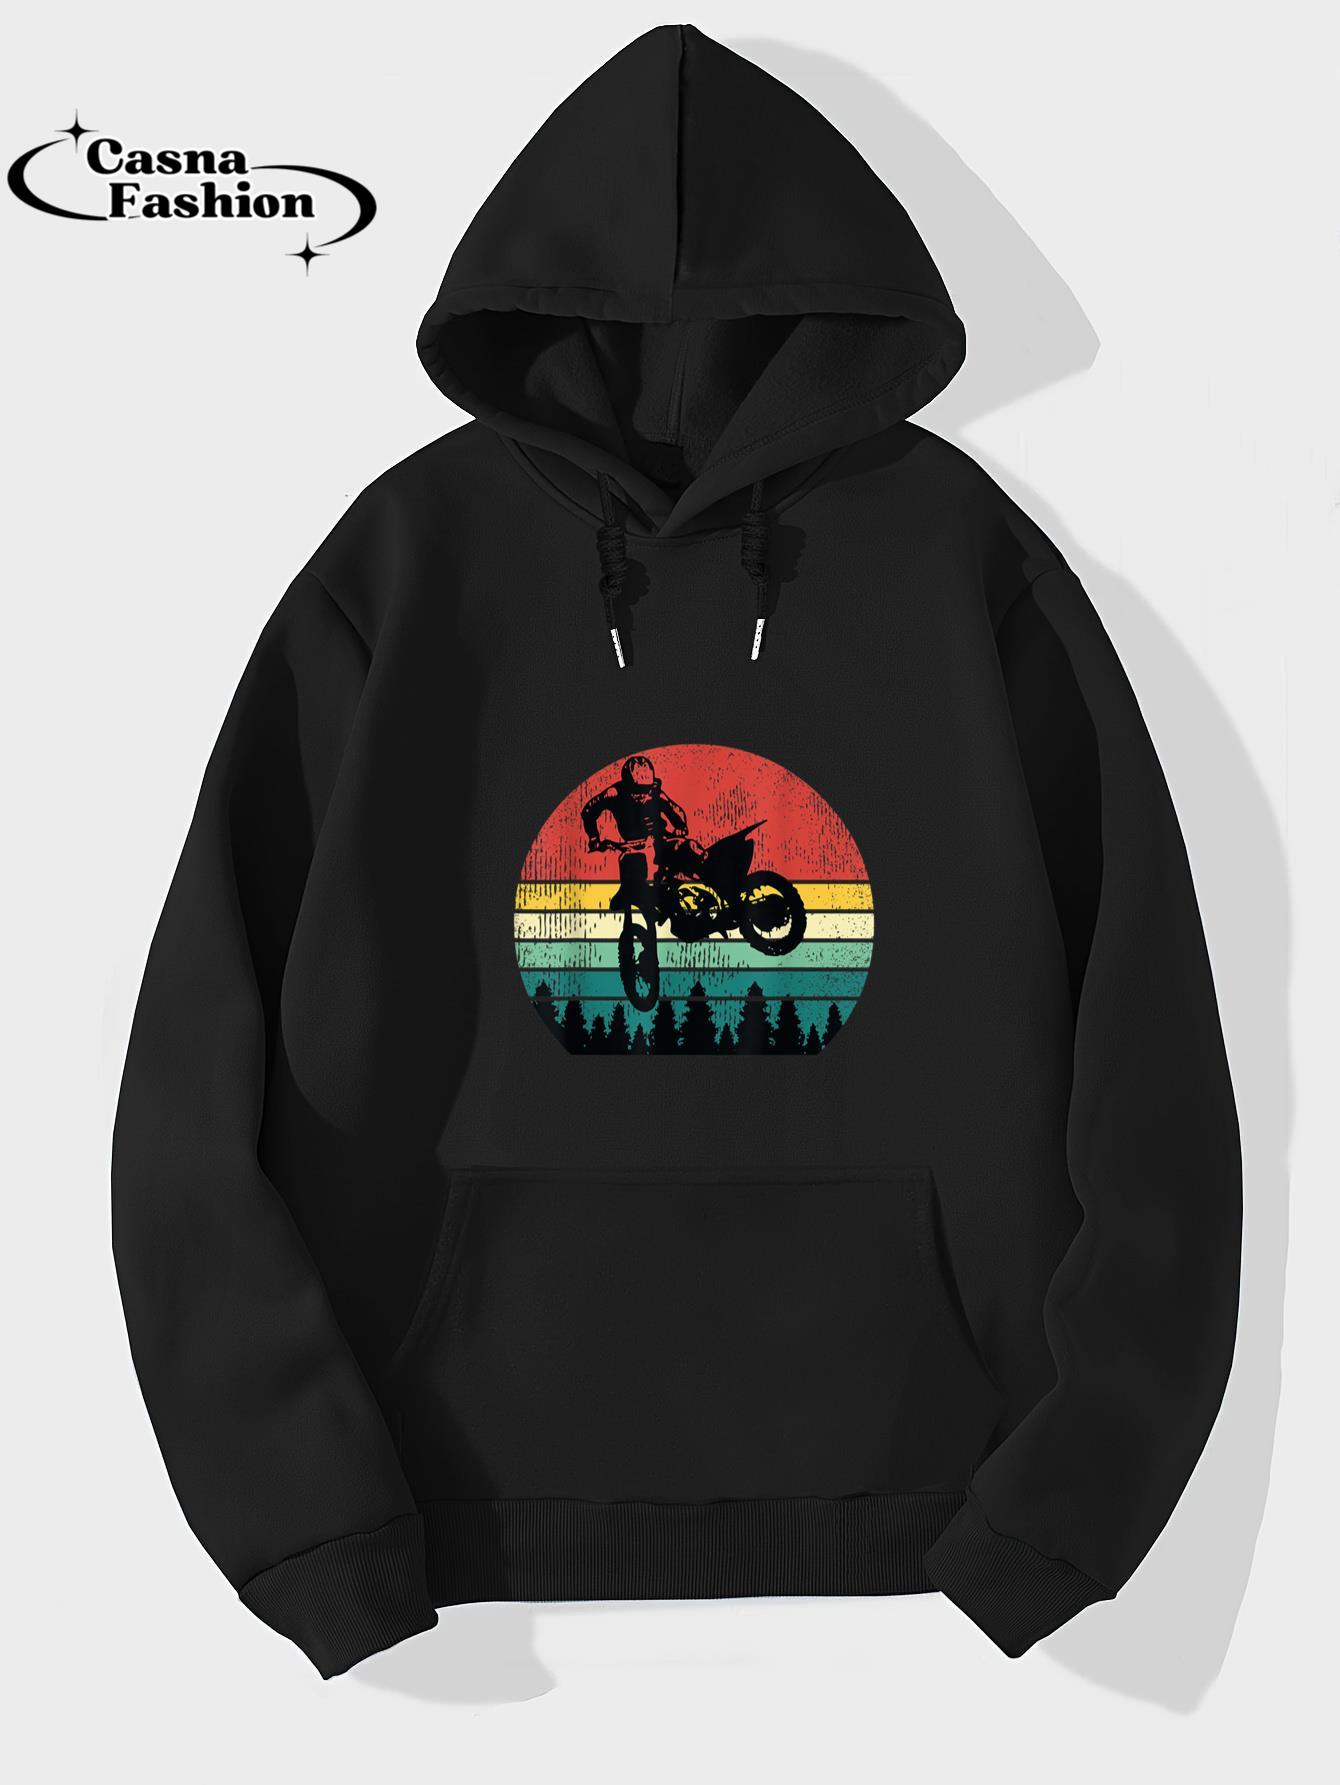 casnafashion_Hoodie_Retro Dirt Bike Motocross Motorcycle Rider Gift T-Shirt_hoodie_black hoodie